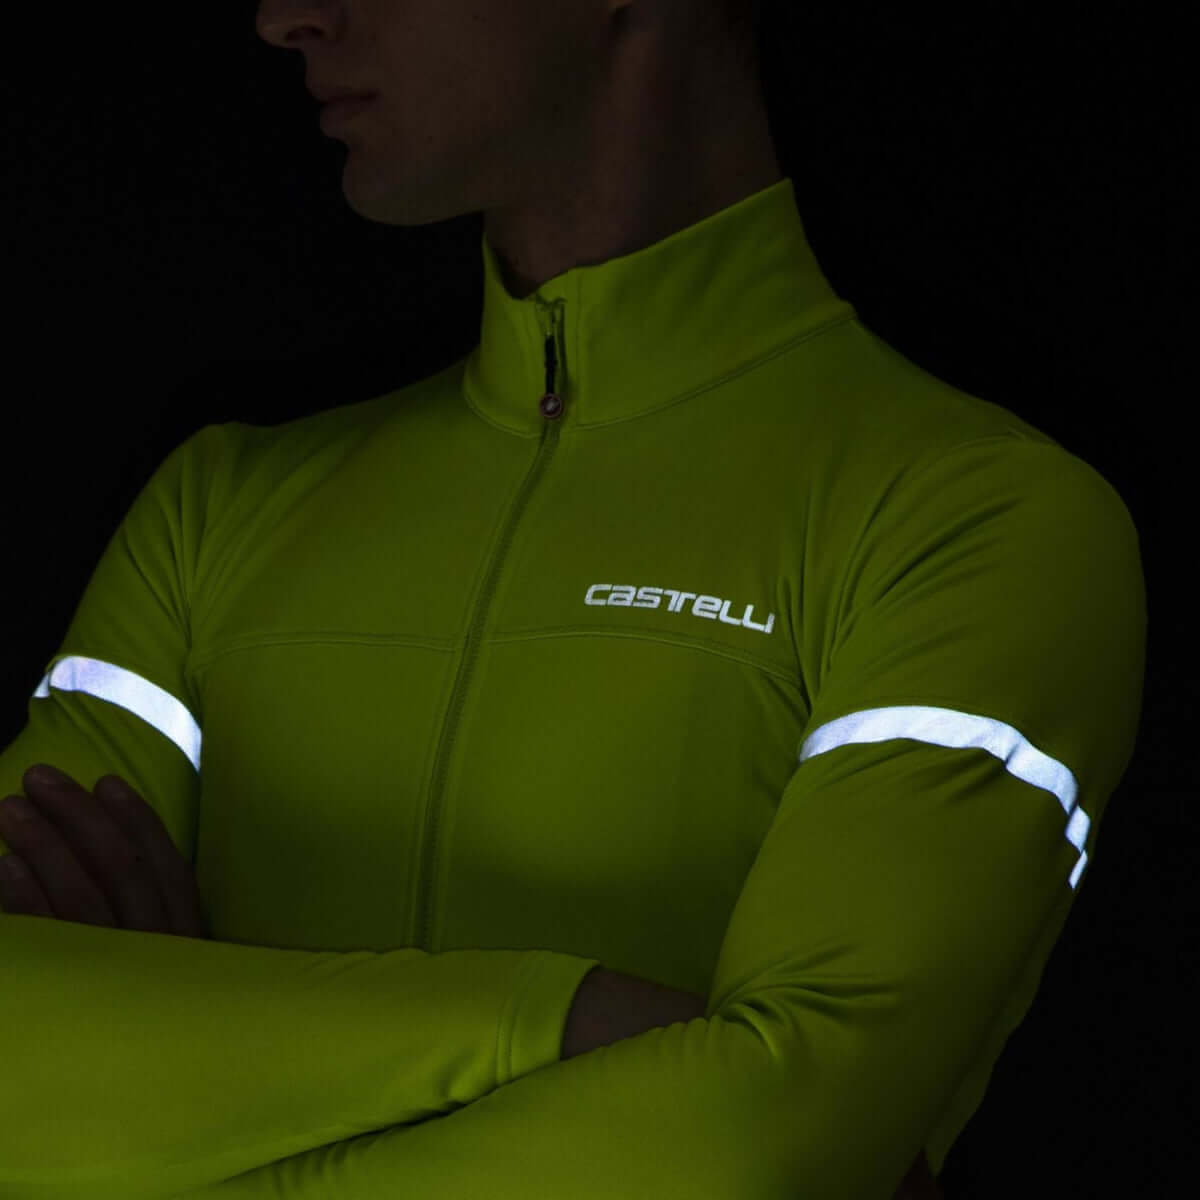 Castelli Fondo 2 Mens Cycling Jersey (Electric Lime/Silver Reflex)